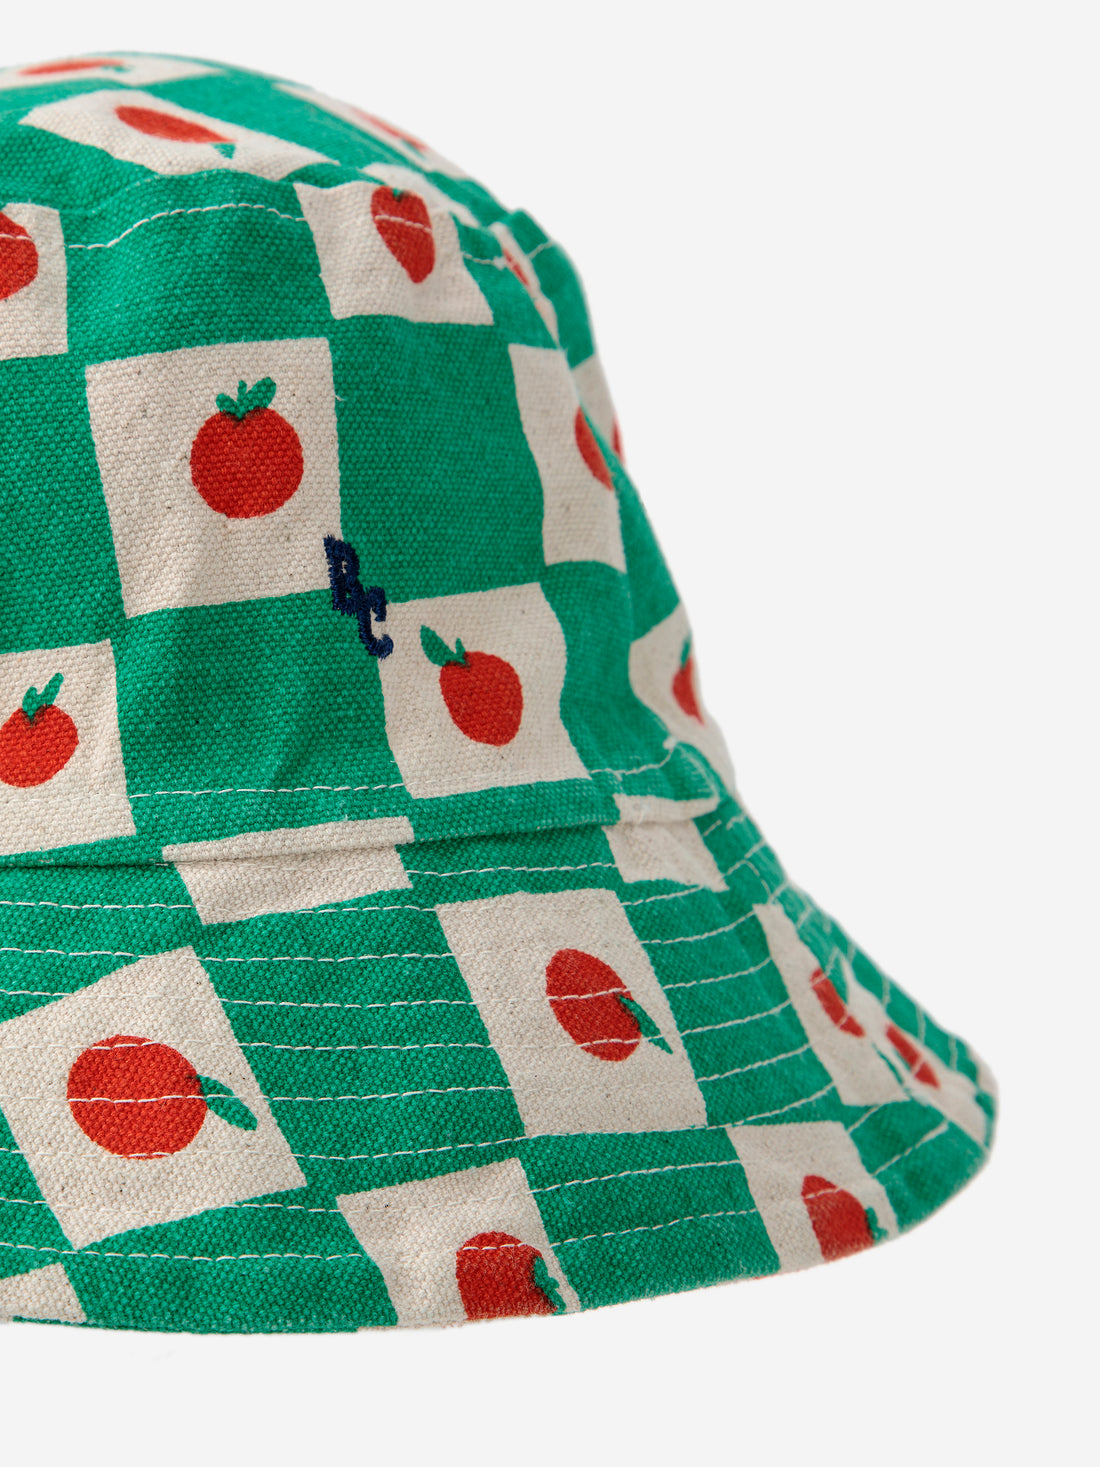 Bucket Hat | Tomatoes